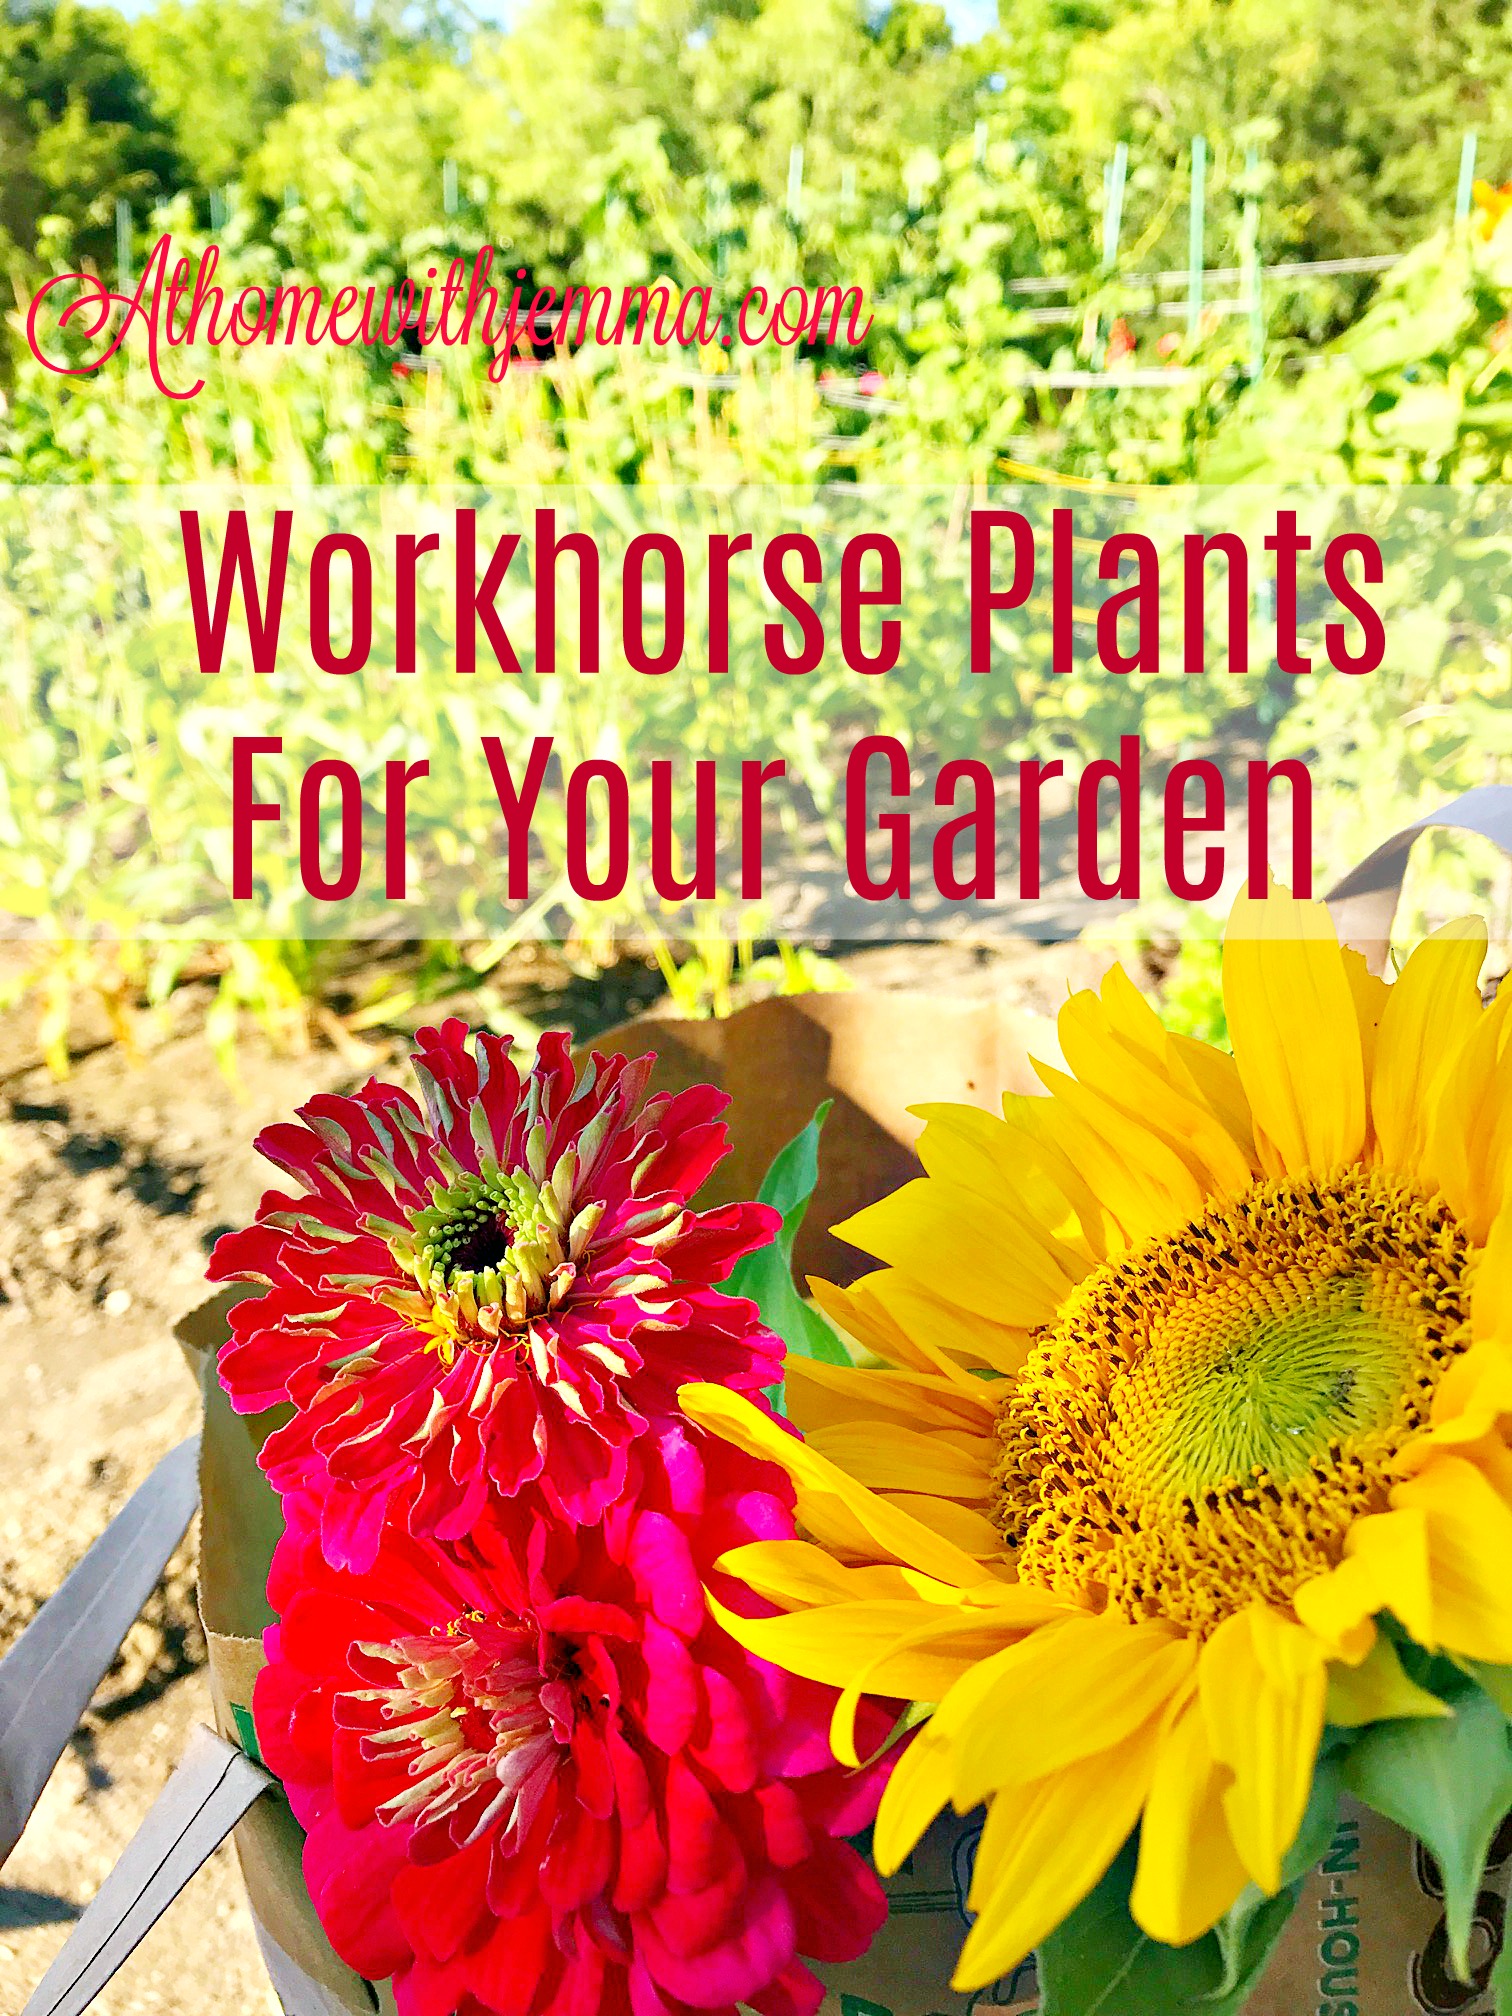 gardening-tips-plants-choices-best-gardening-ideas-athomewithjemma